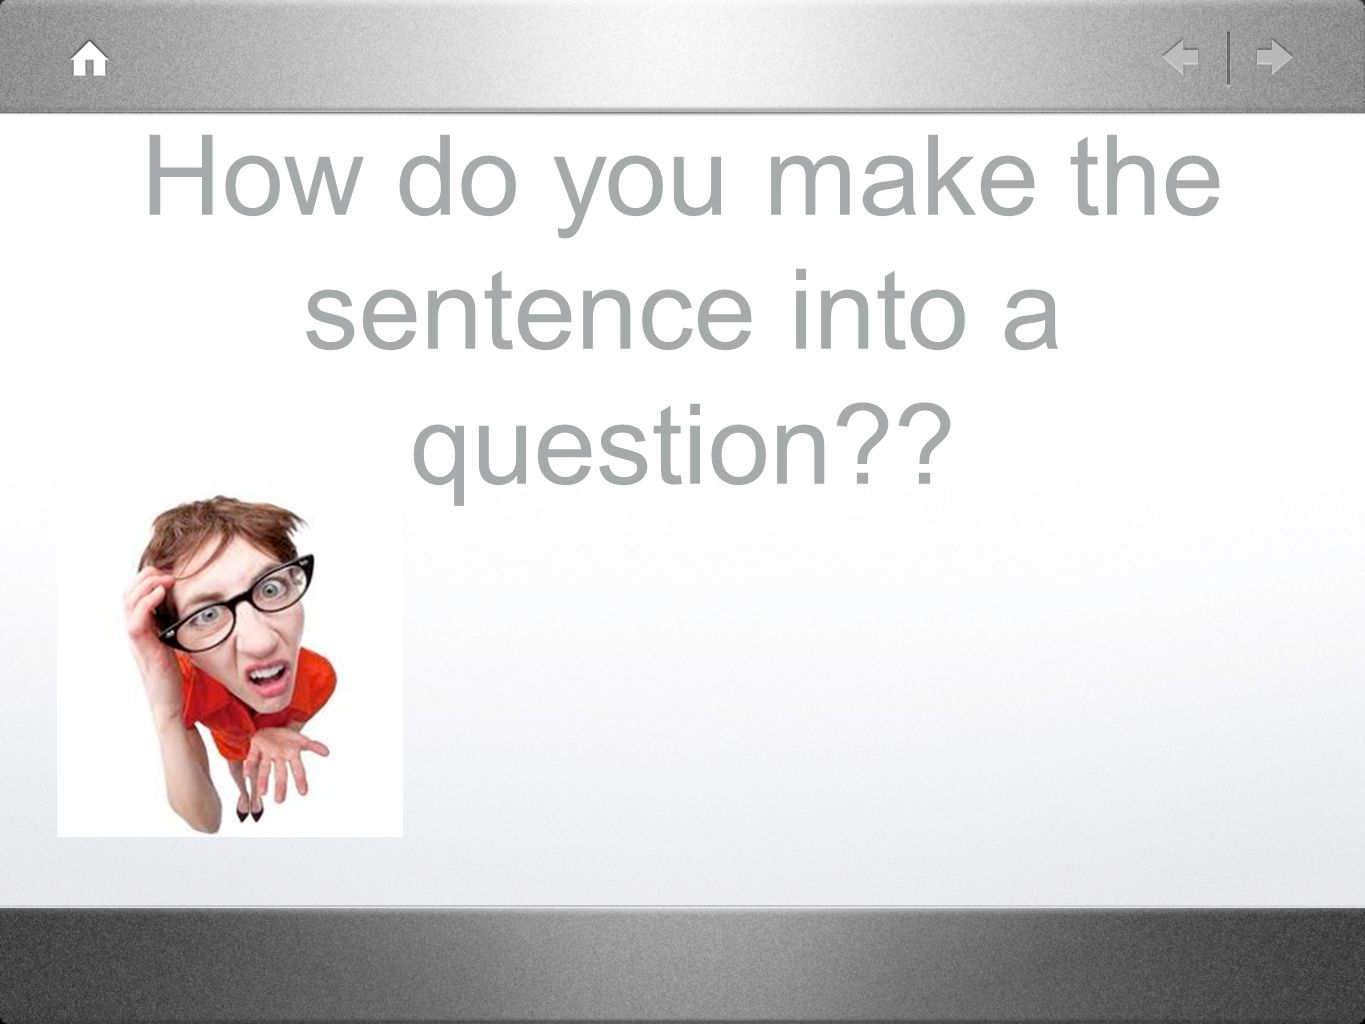 How do you make the sentence into a question